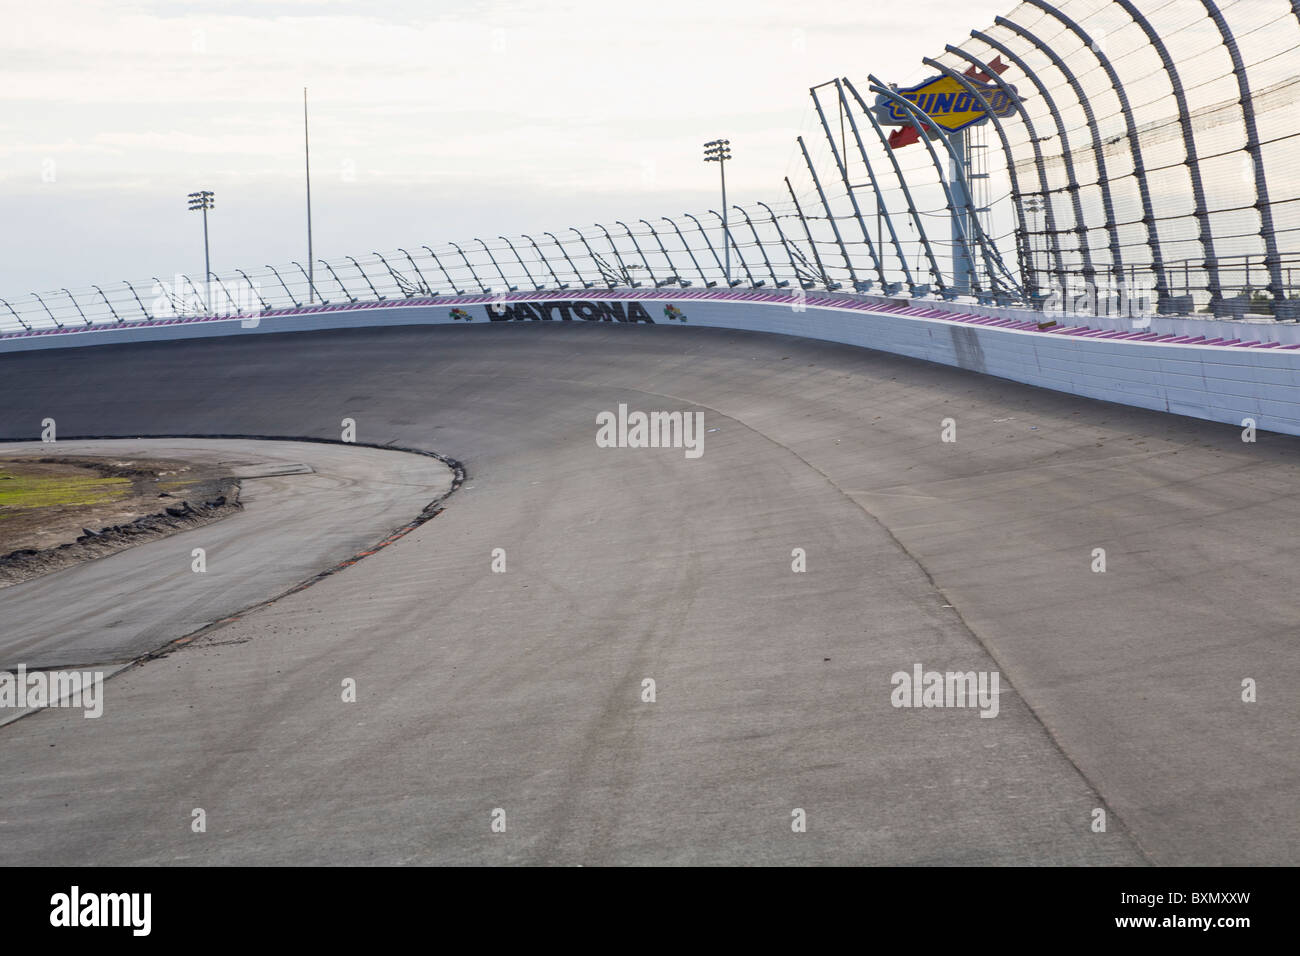 Empty banked race track at Daytona International Speedway in Daytona Beach Florida Stock Photo